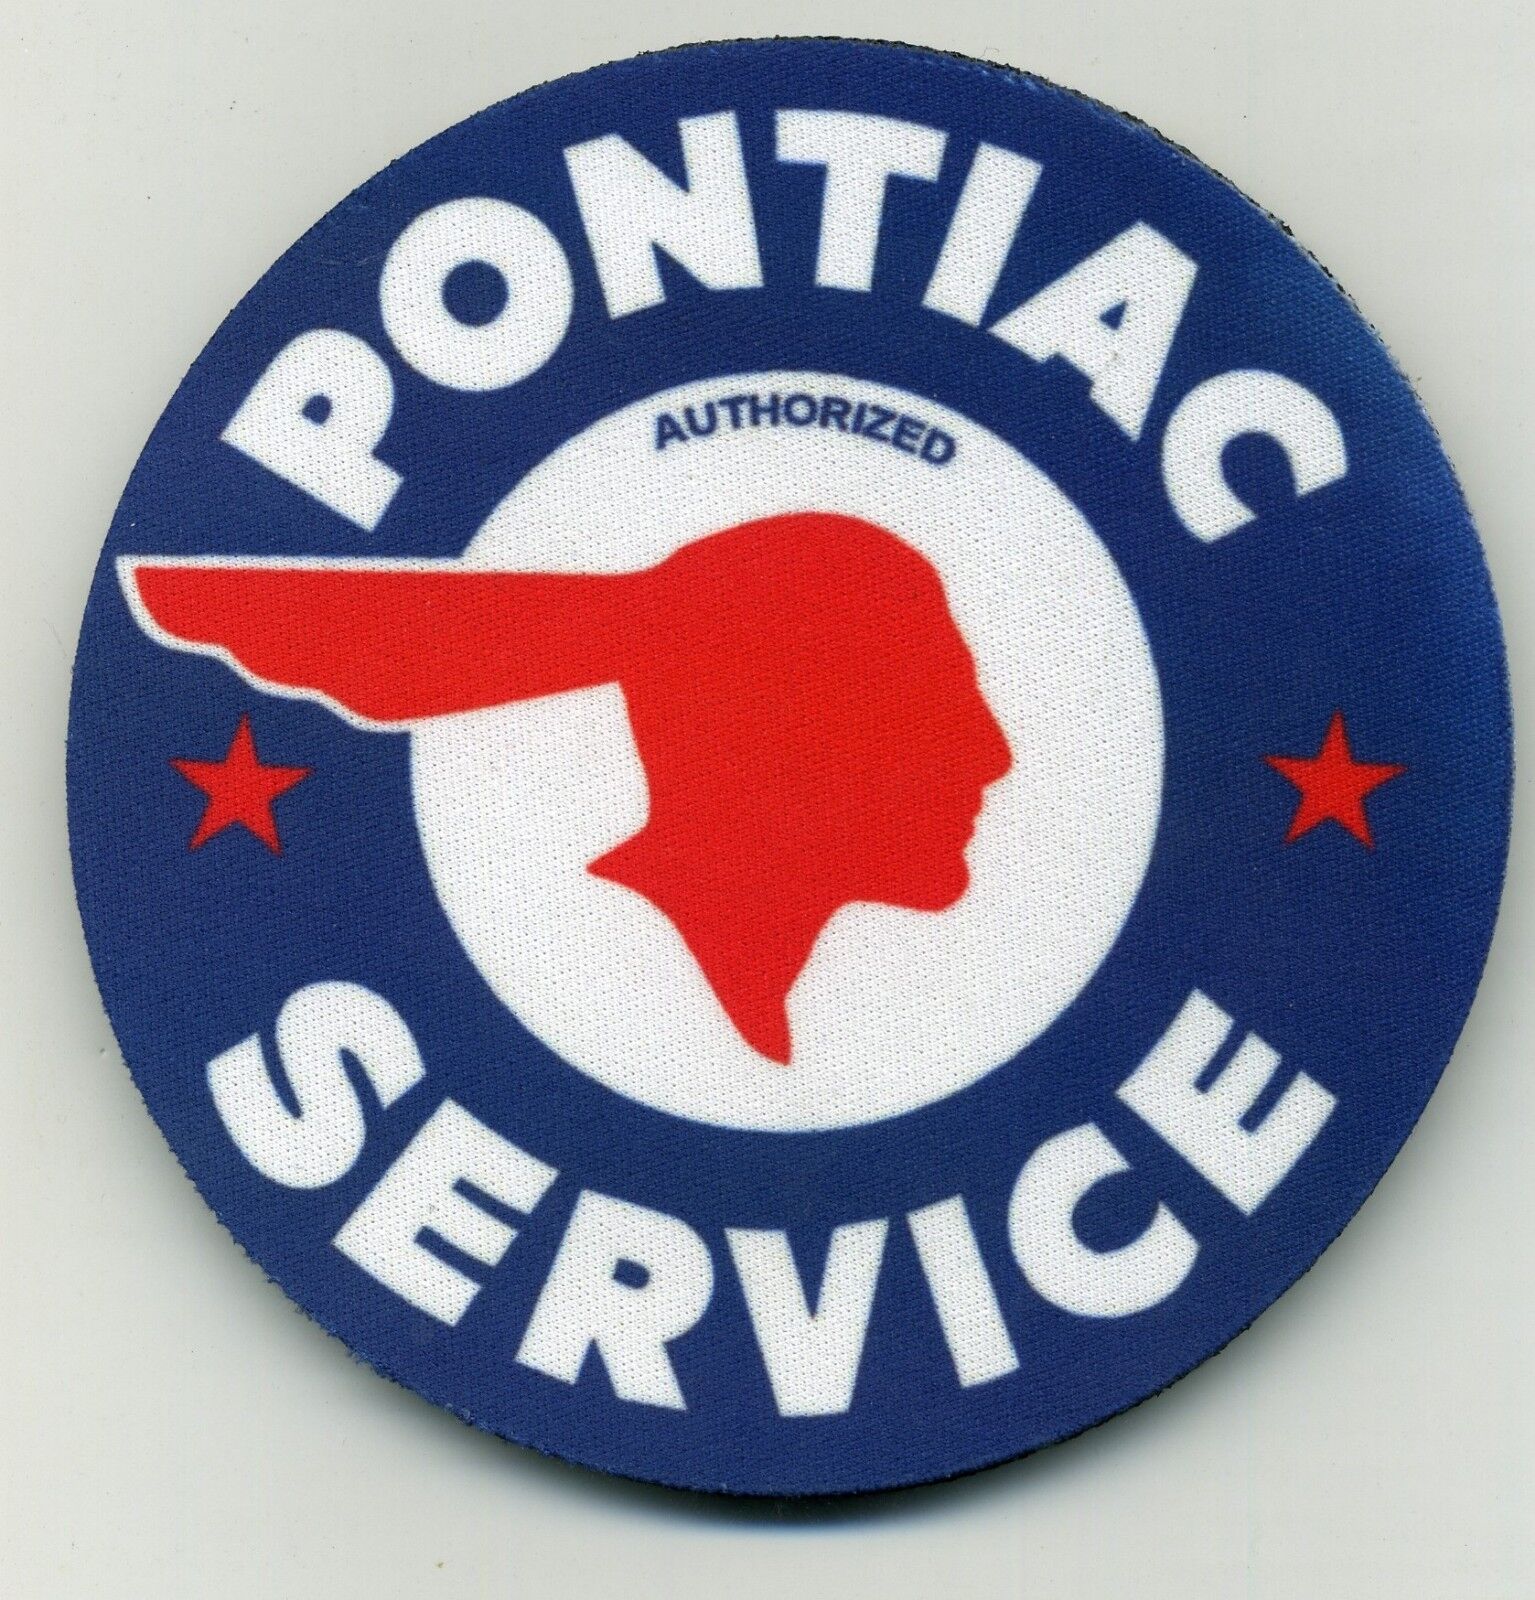 Pontiac Authorized Service - General Motors Drink COASTER